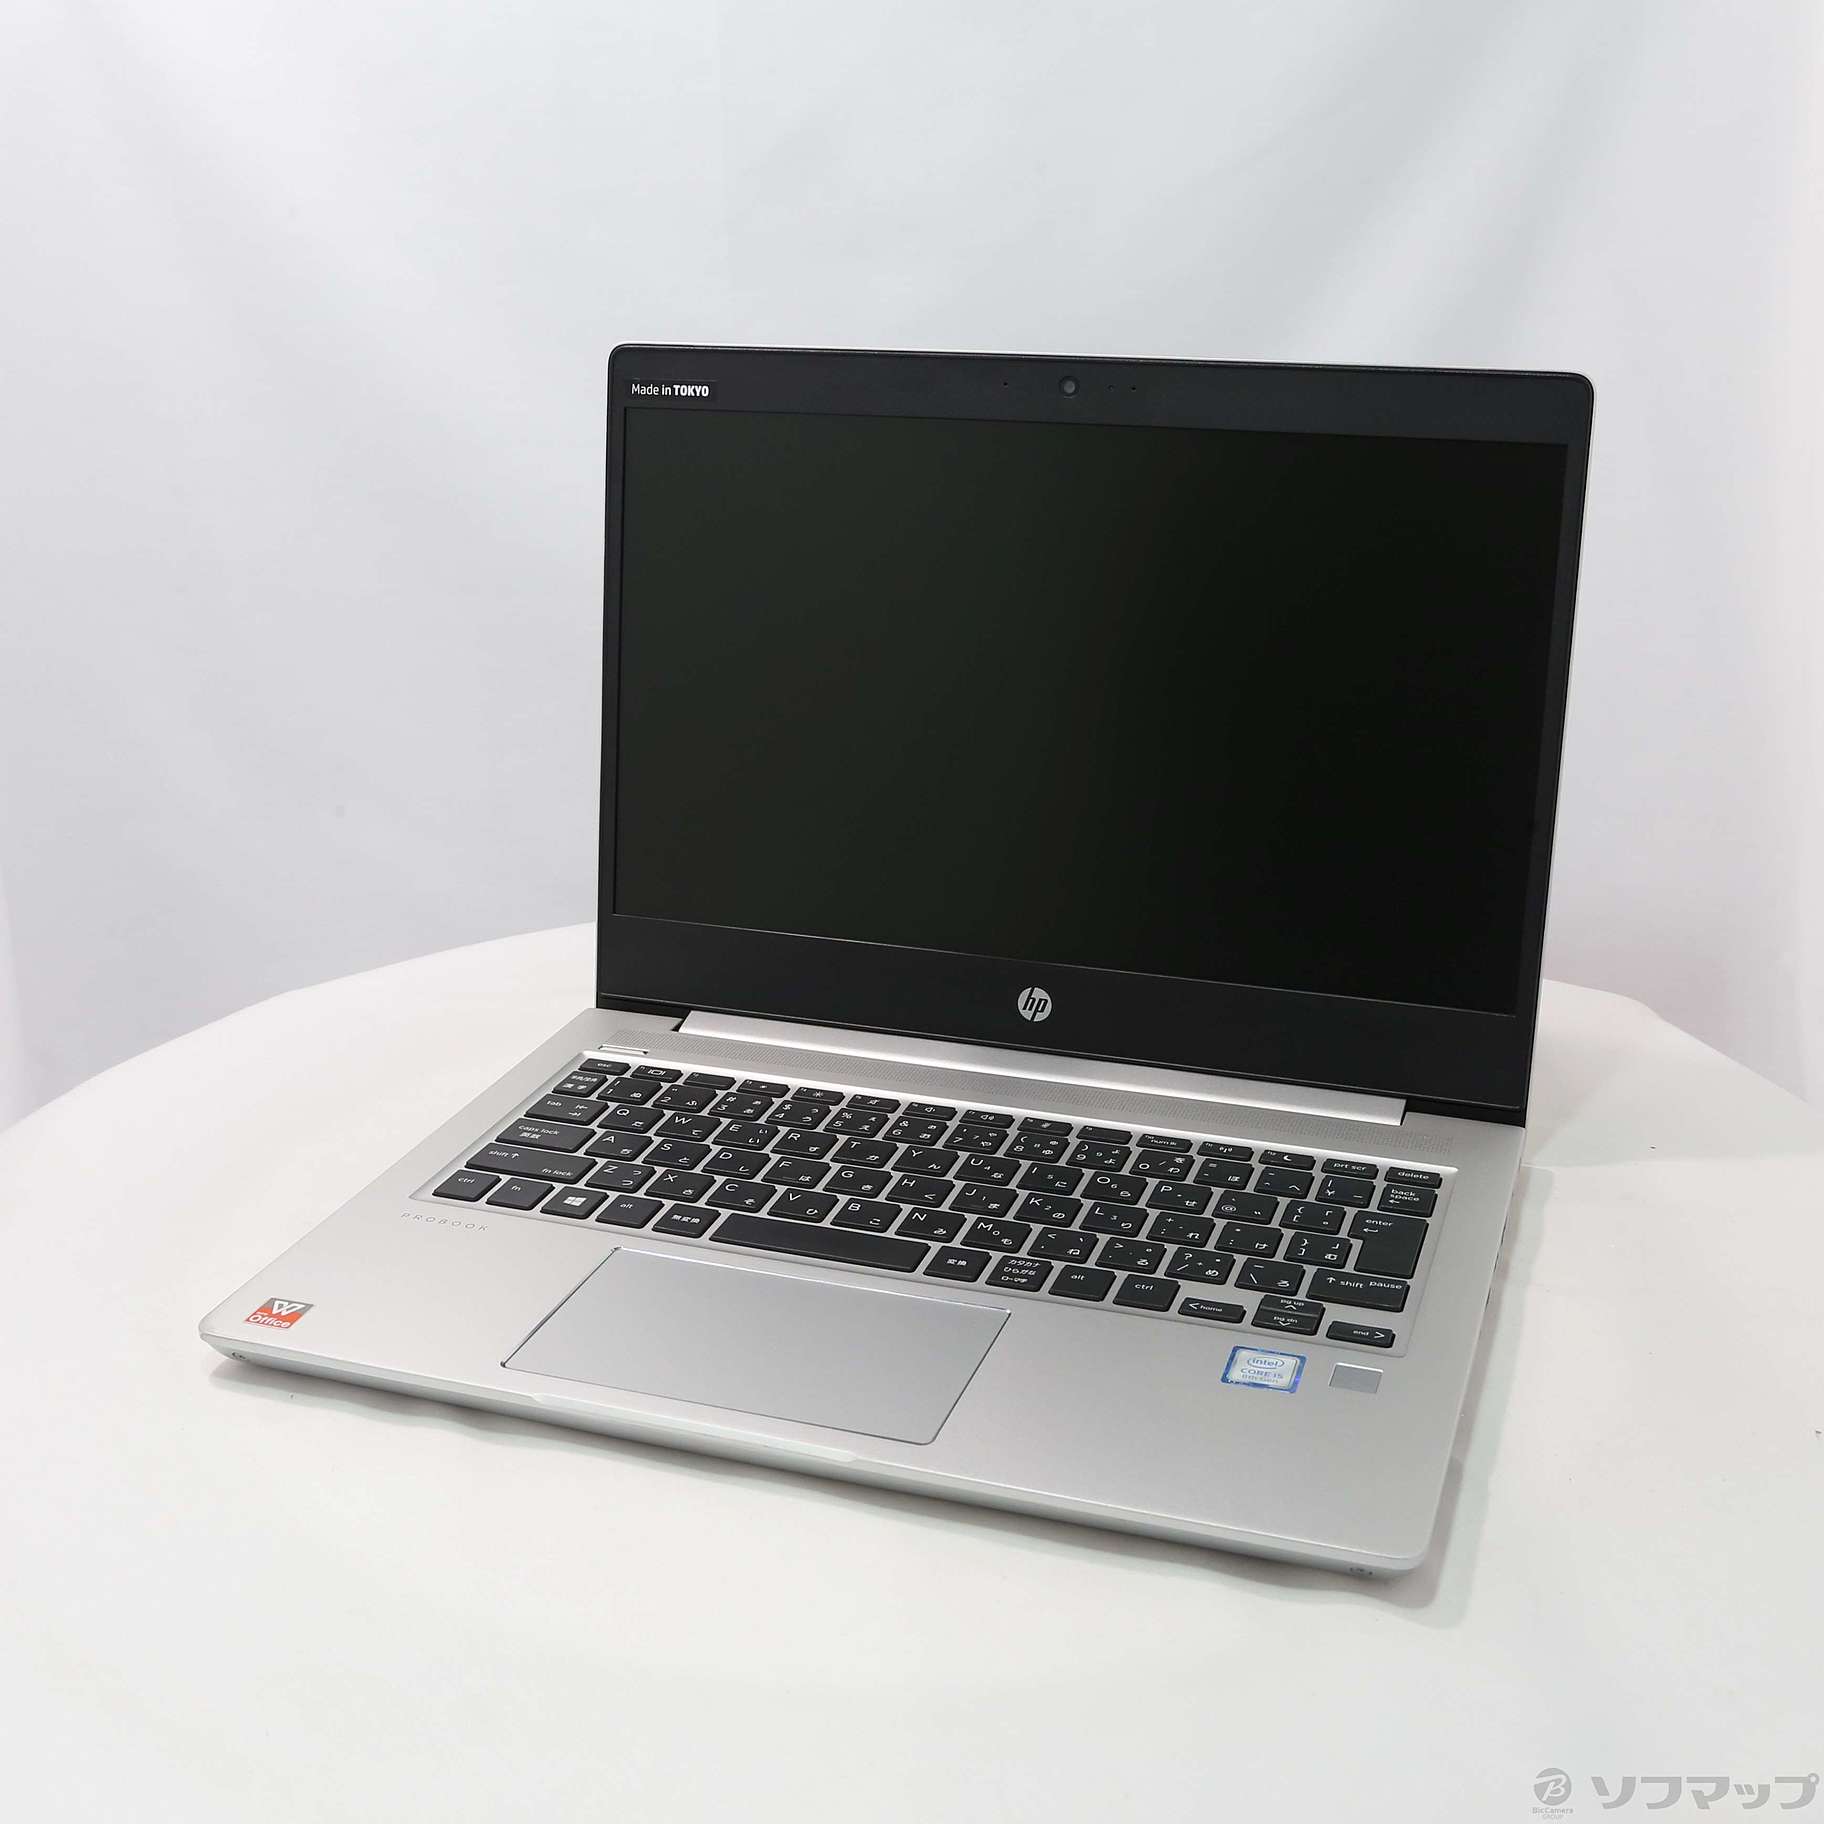 【office2021付／超高速SSD】HP ProBook 430 G6